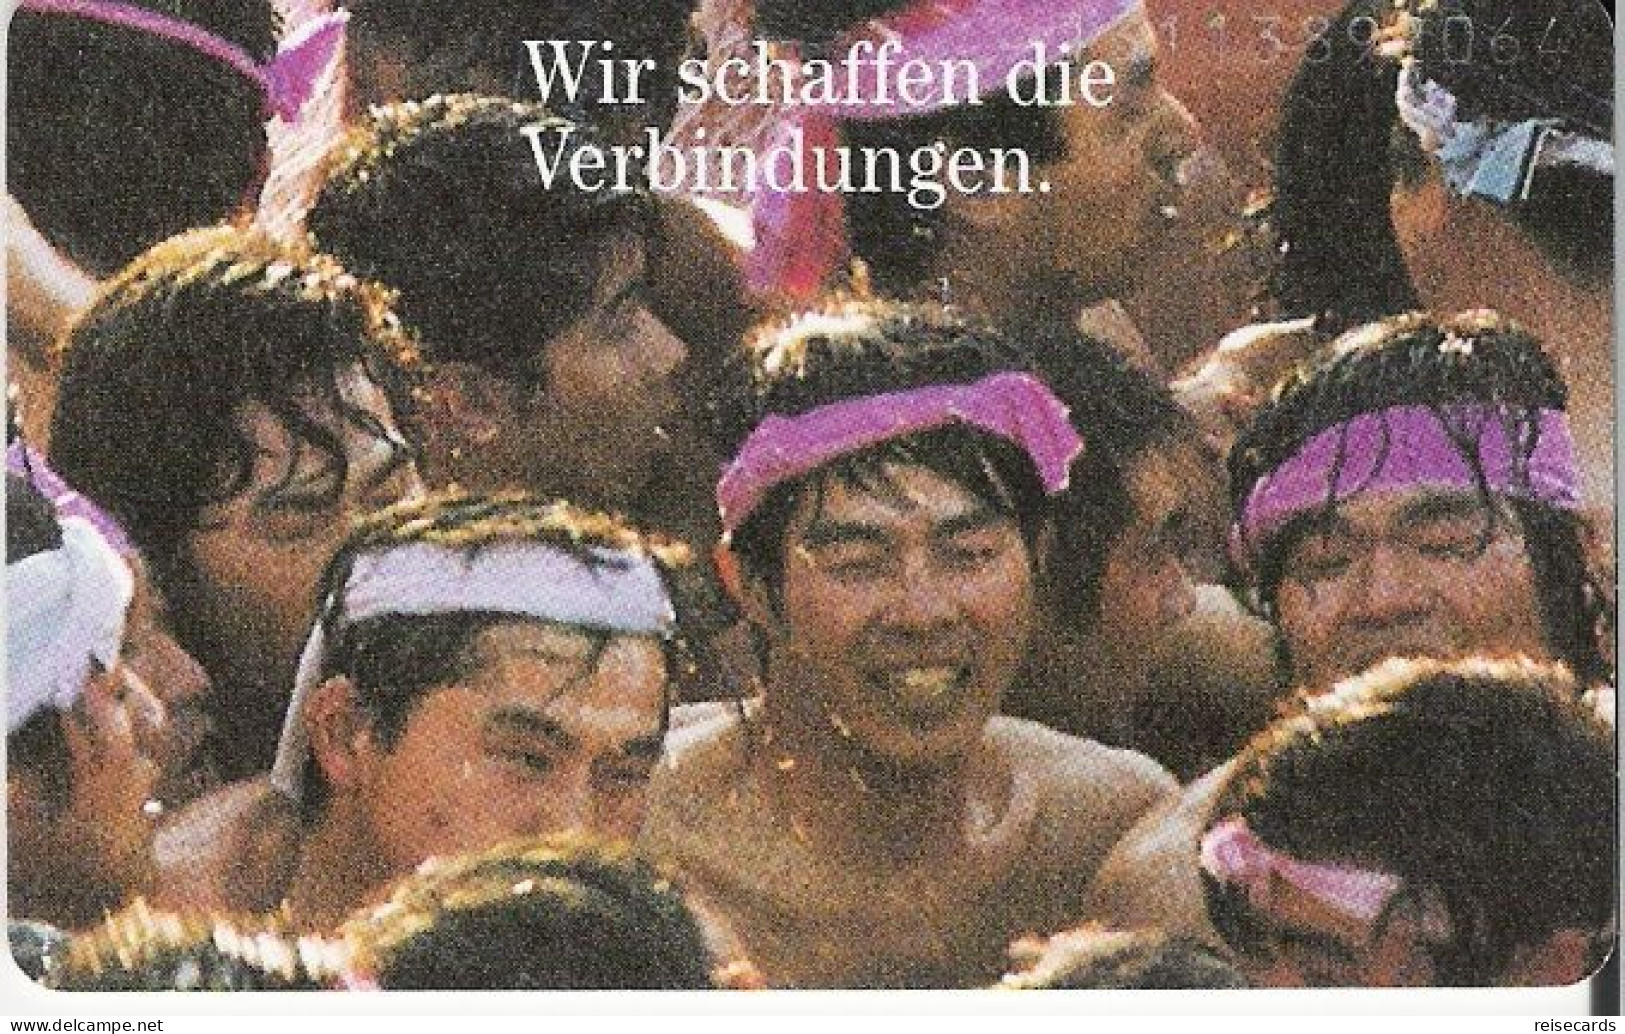 Germany: Telekom A 41 10.93 Weihnachtsedition 1993. Ichinomiya In Japan - A + AD-Series : Publicitarias De Telekom AG Alemania